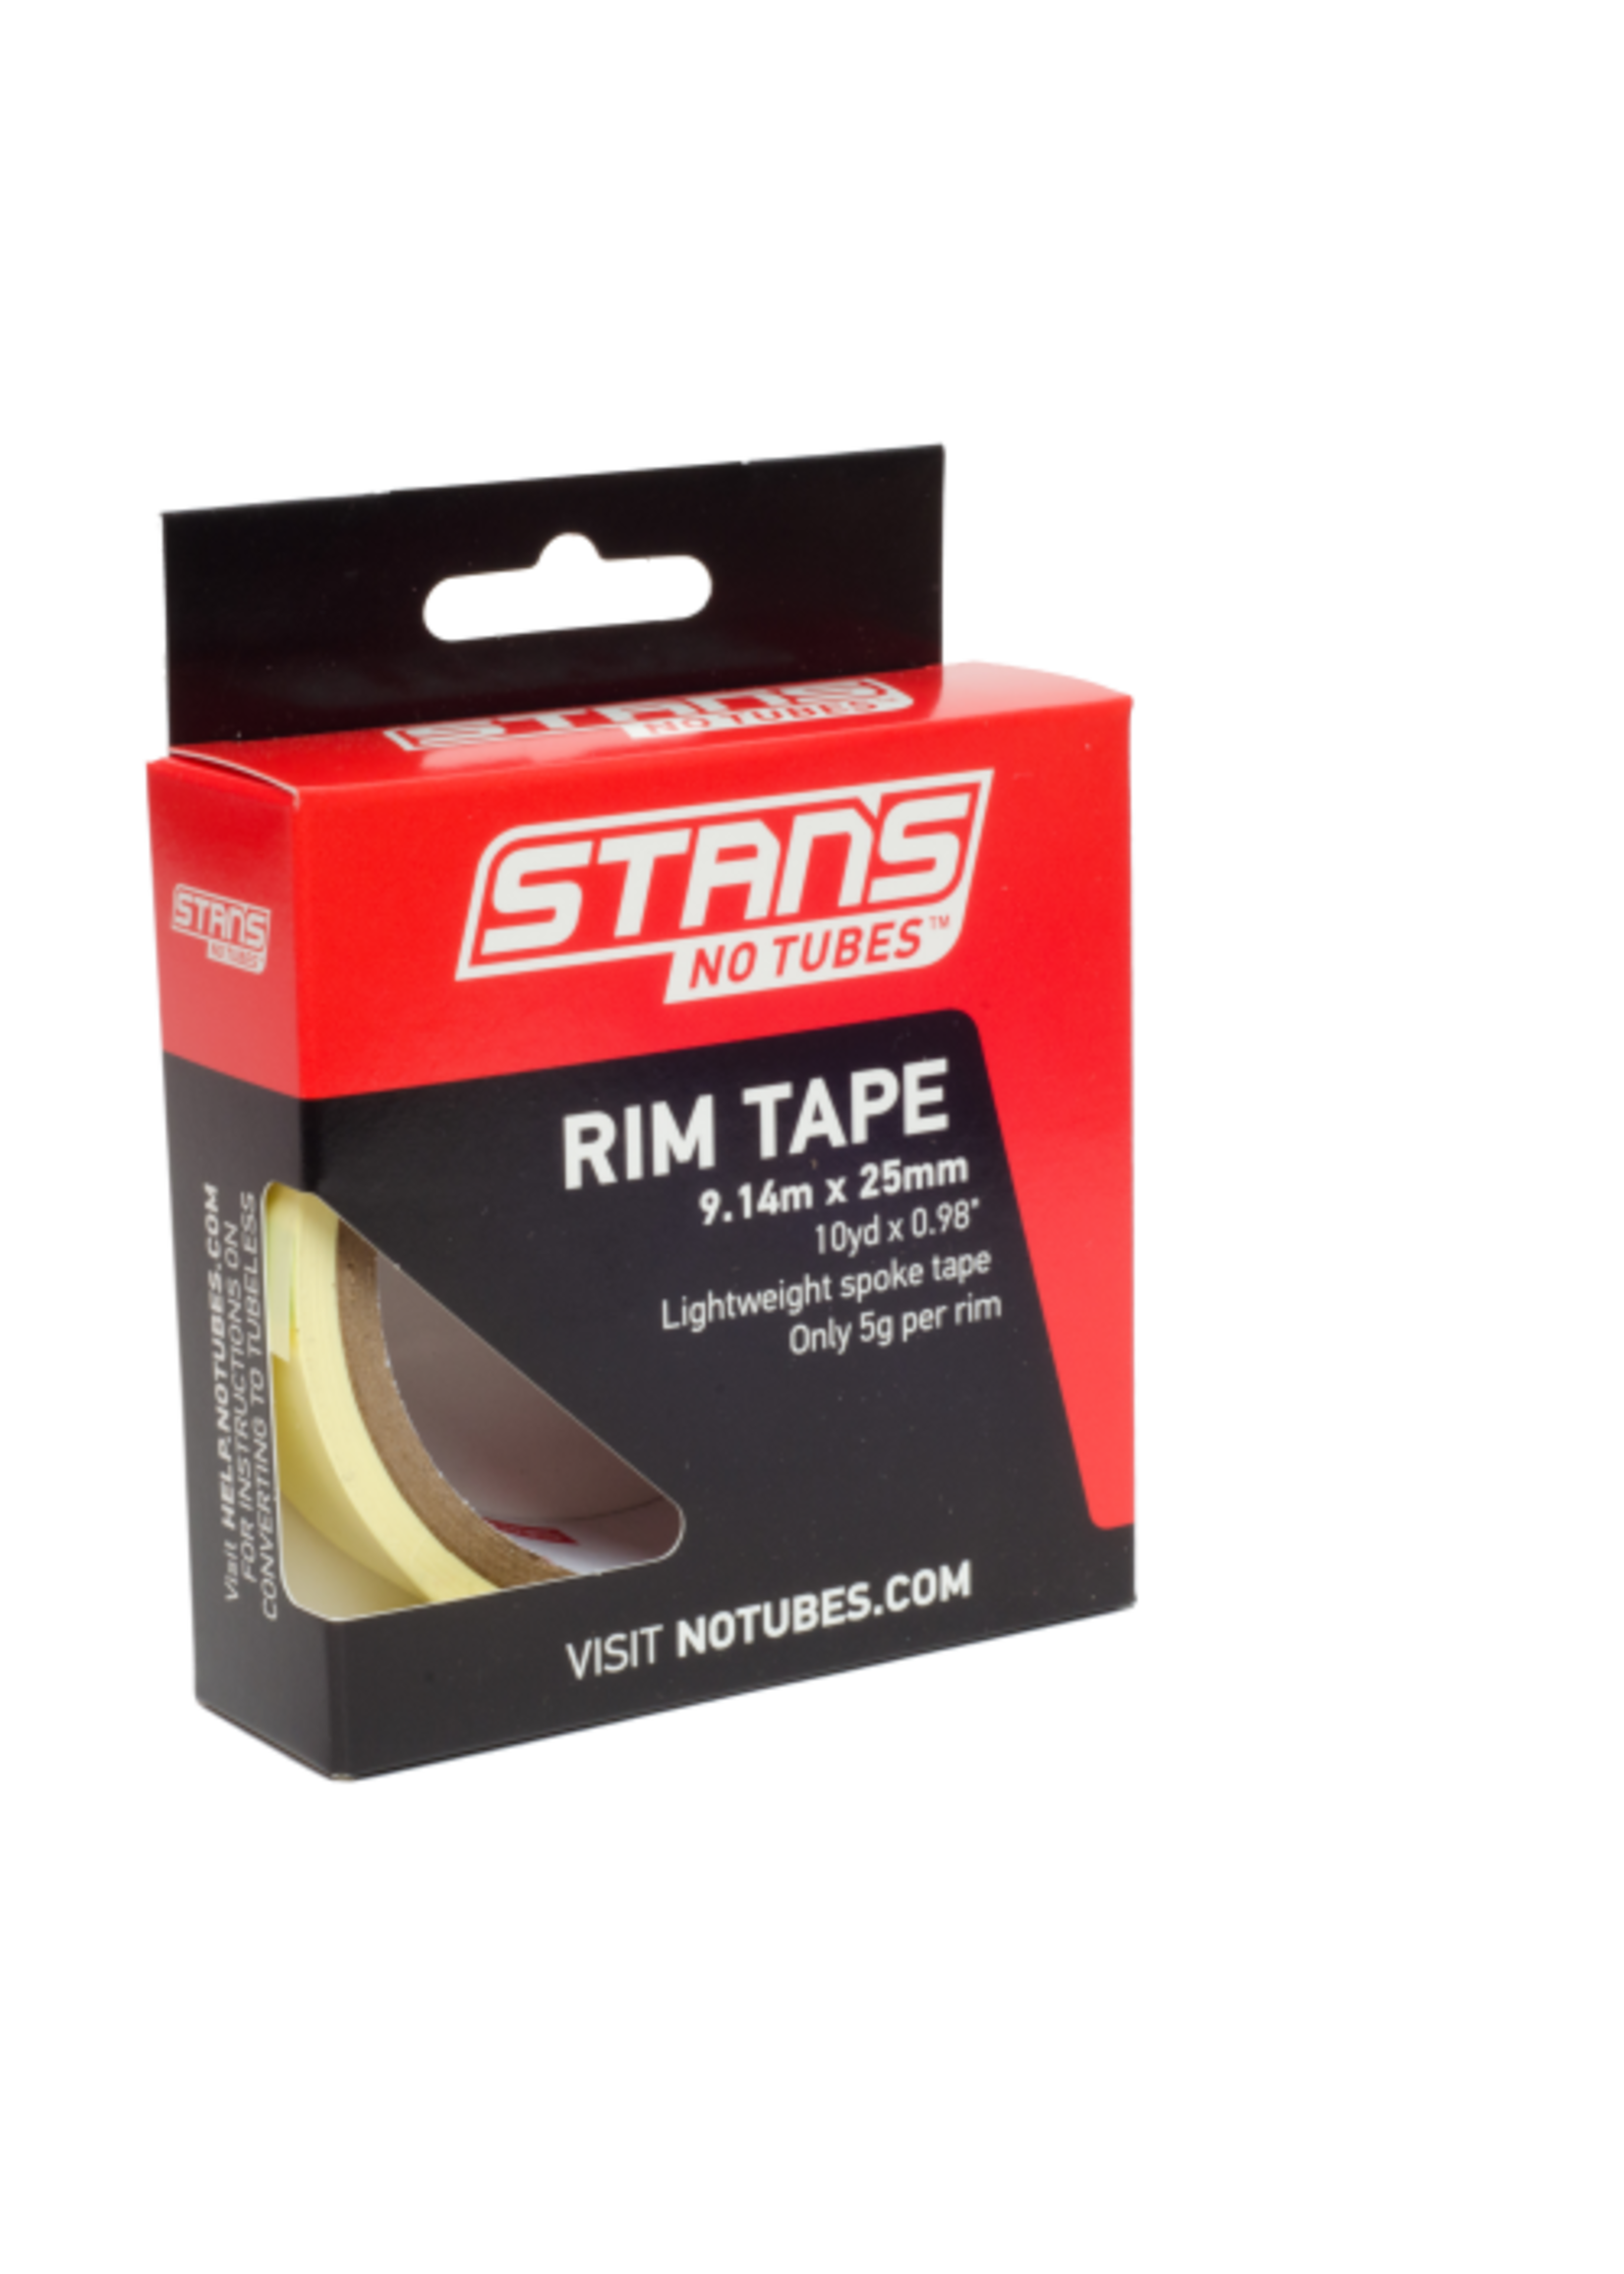 NO TUBES STAN'S, Rim Tape, 25mm x 9.14m roll